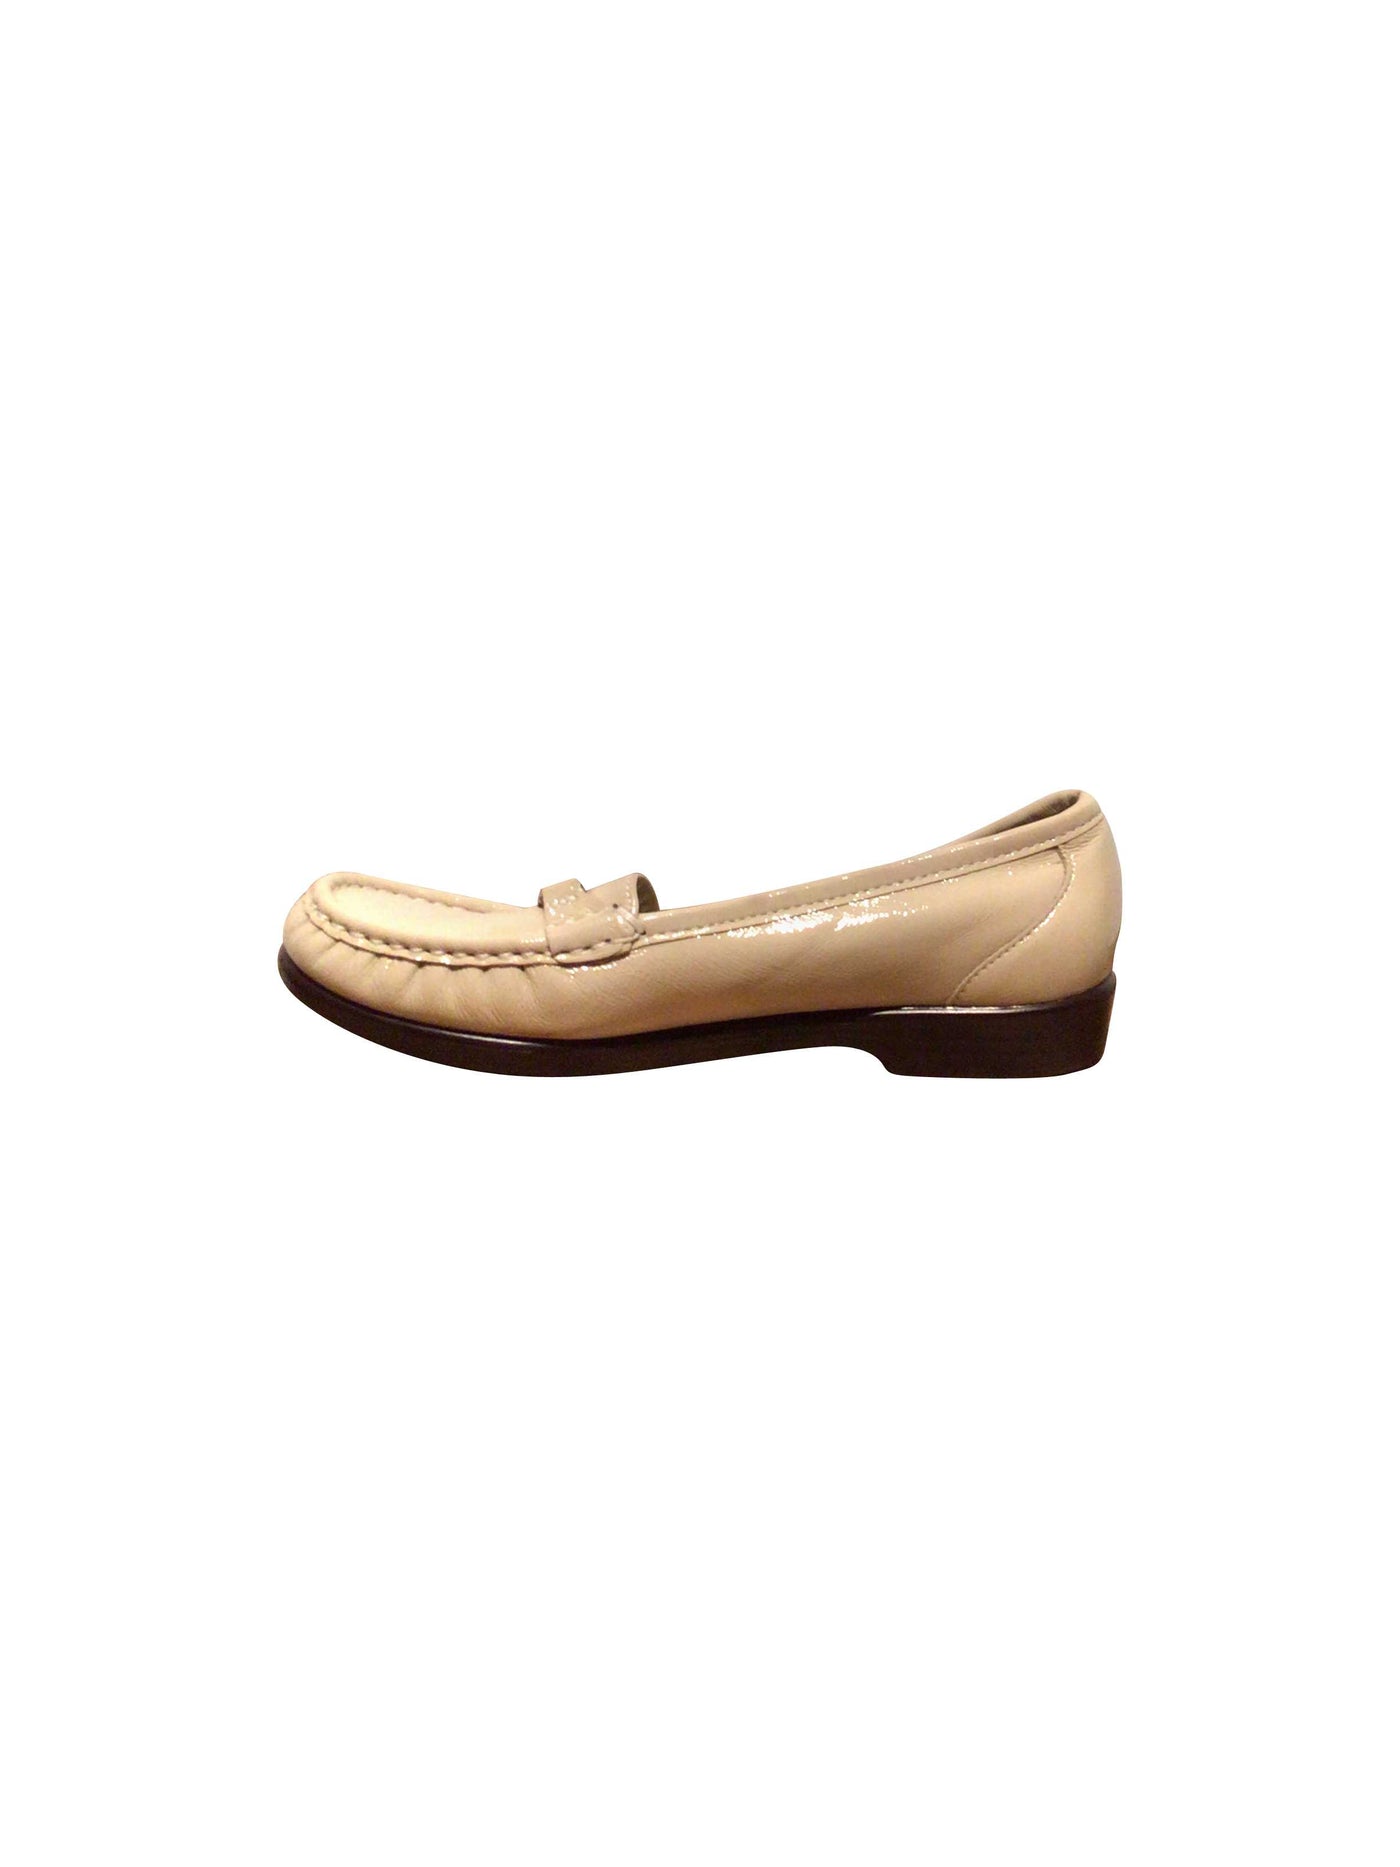 TRIPAD SAS Flats Shoes in Beige  -  7.5  10.40 Koop